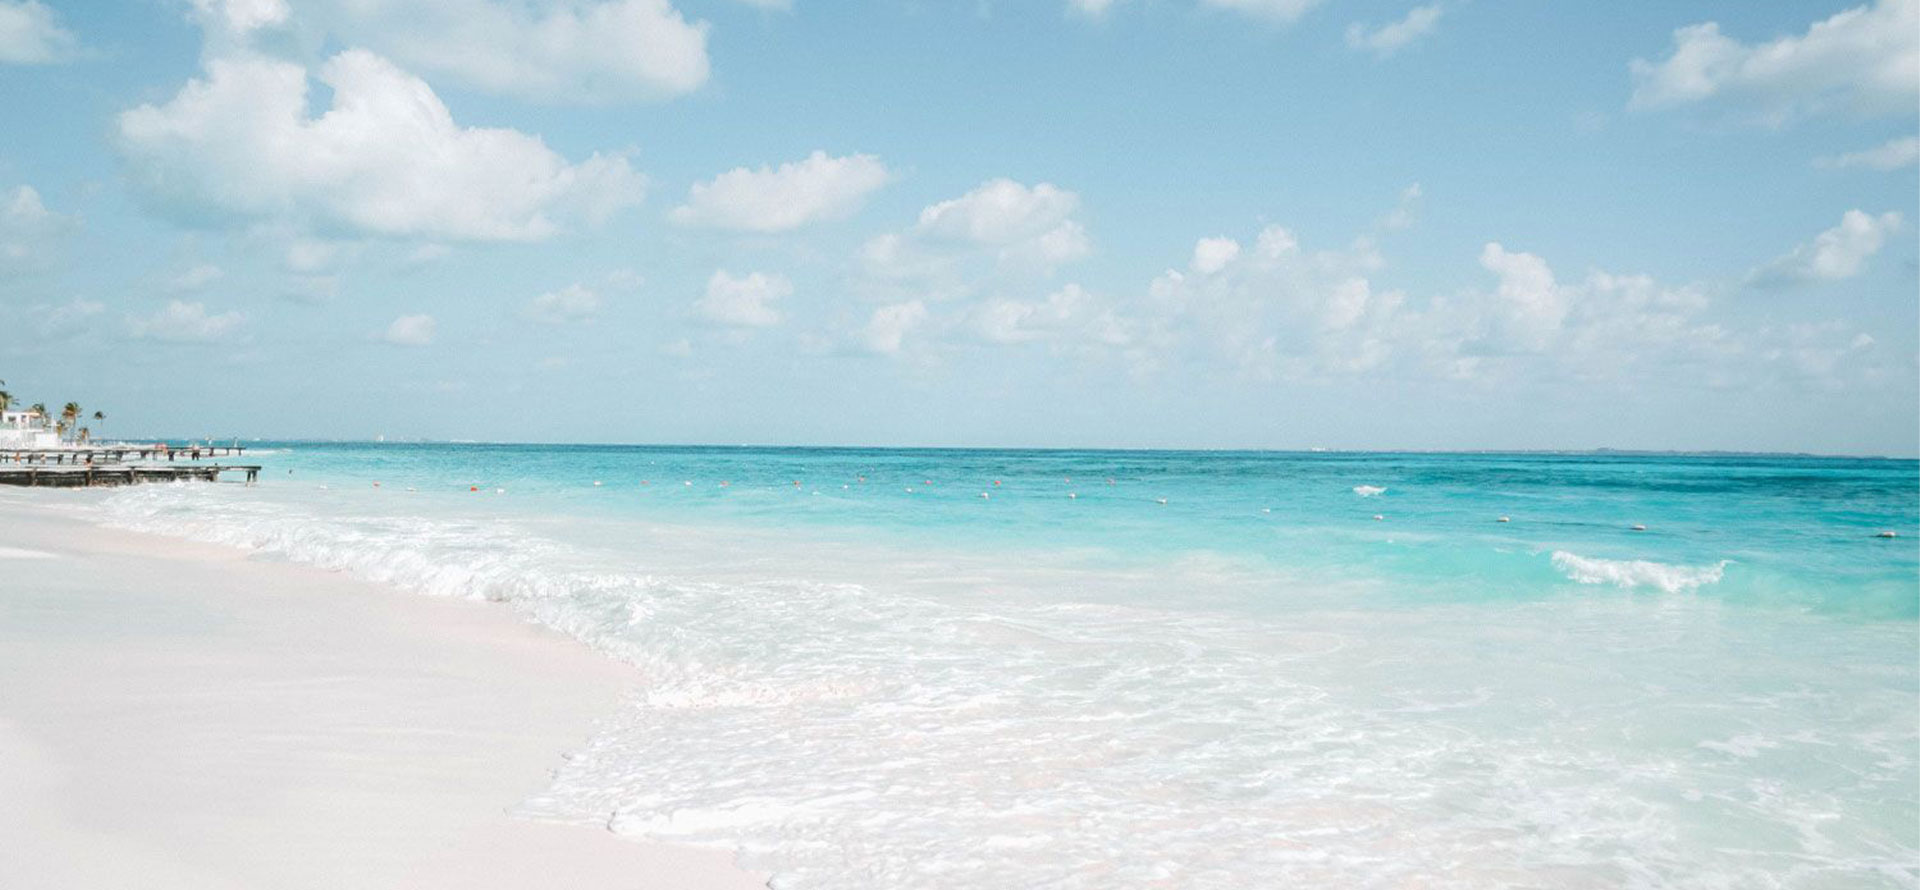 Cancun best time to visit beautiful beach.